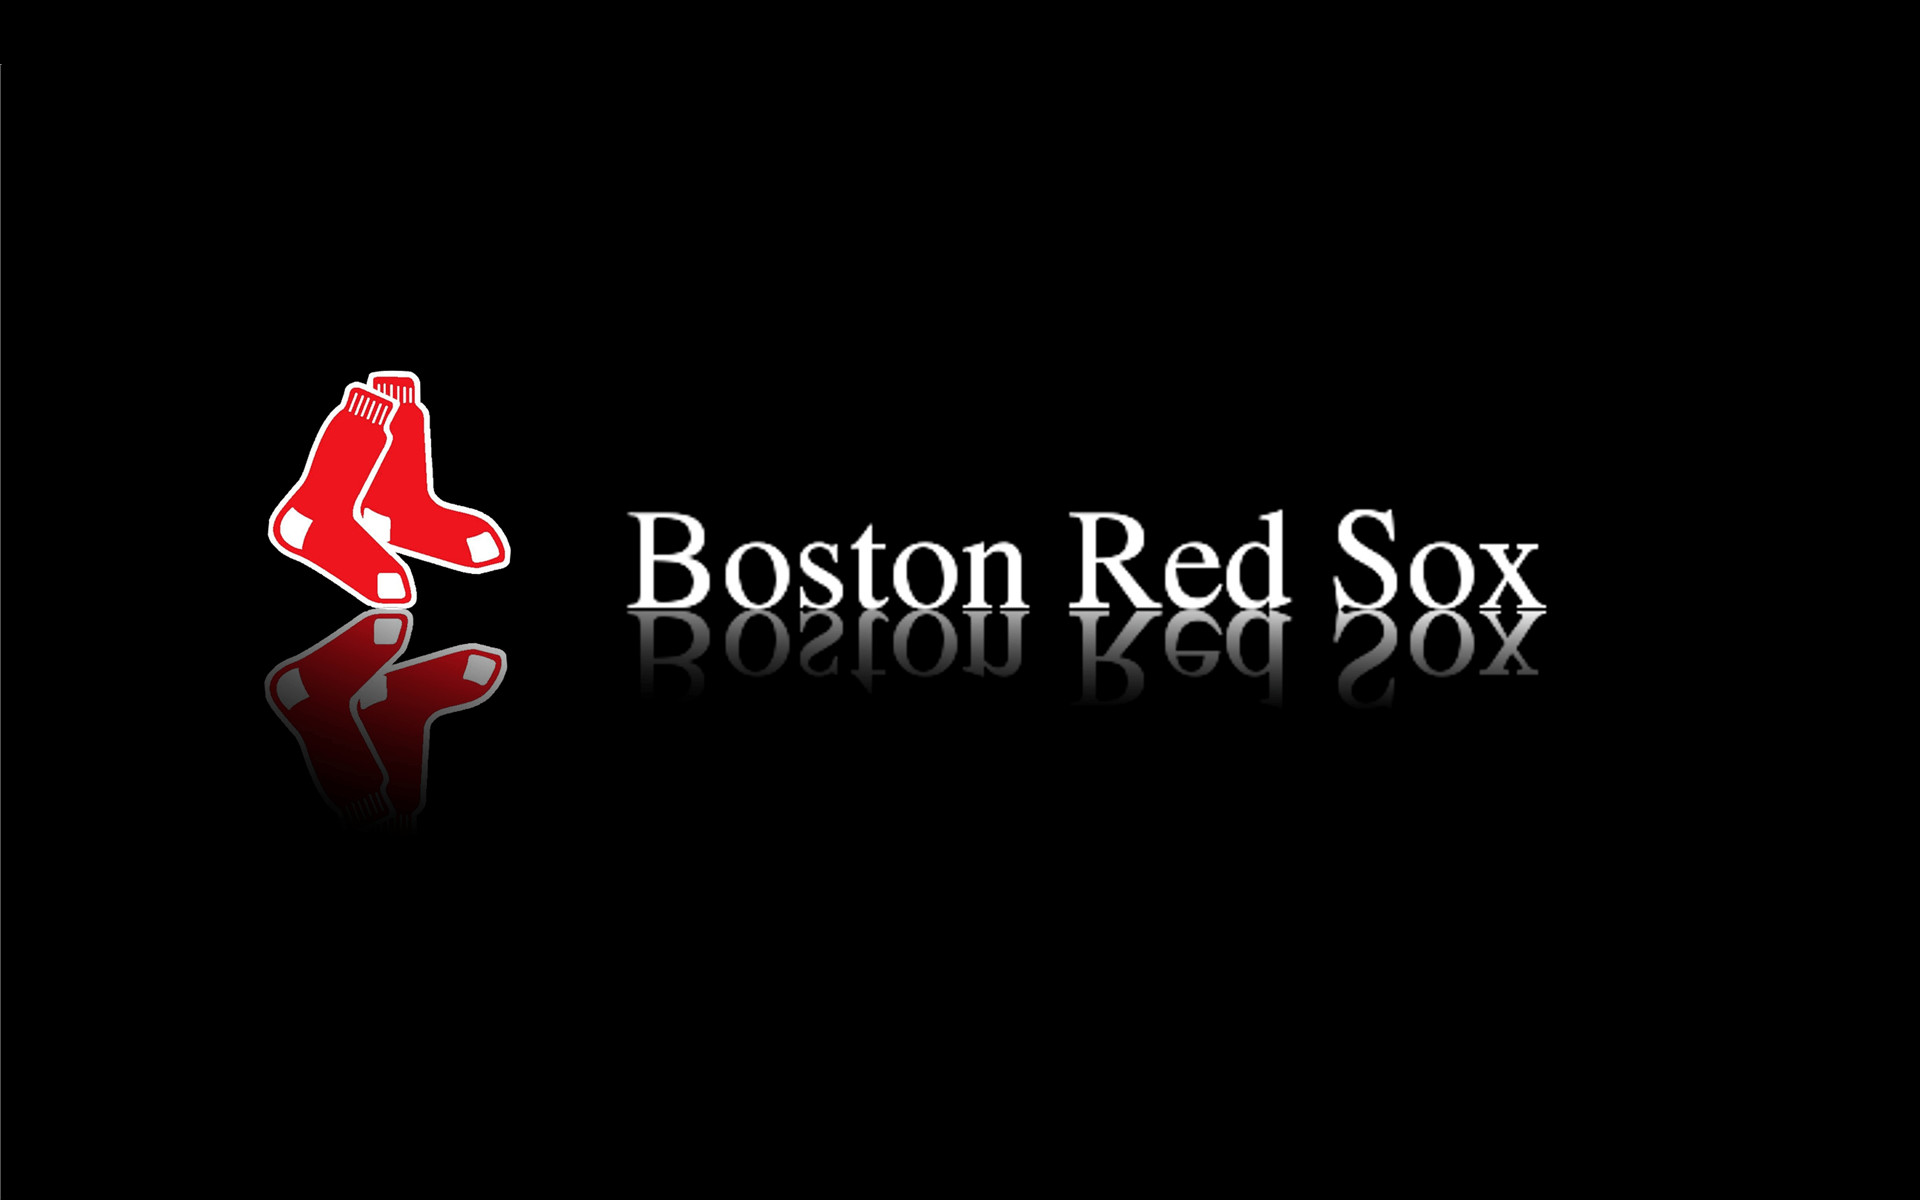 1920x1200 1366x768 Boston Red Sox Logo Wallpaper | Free Download Wallpaper from .